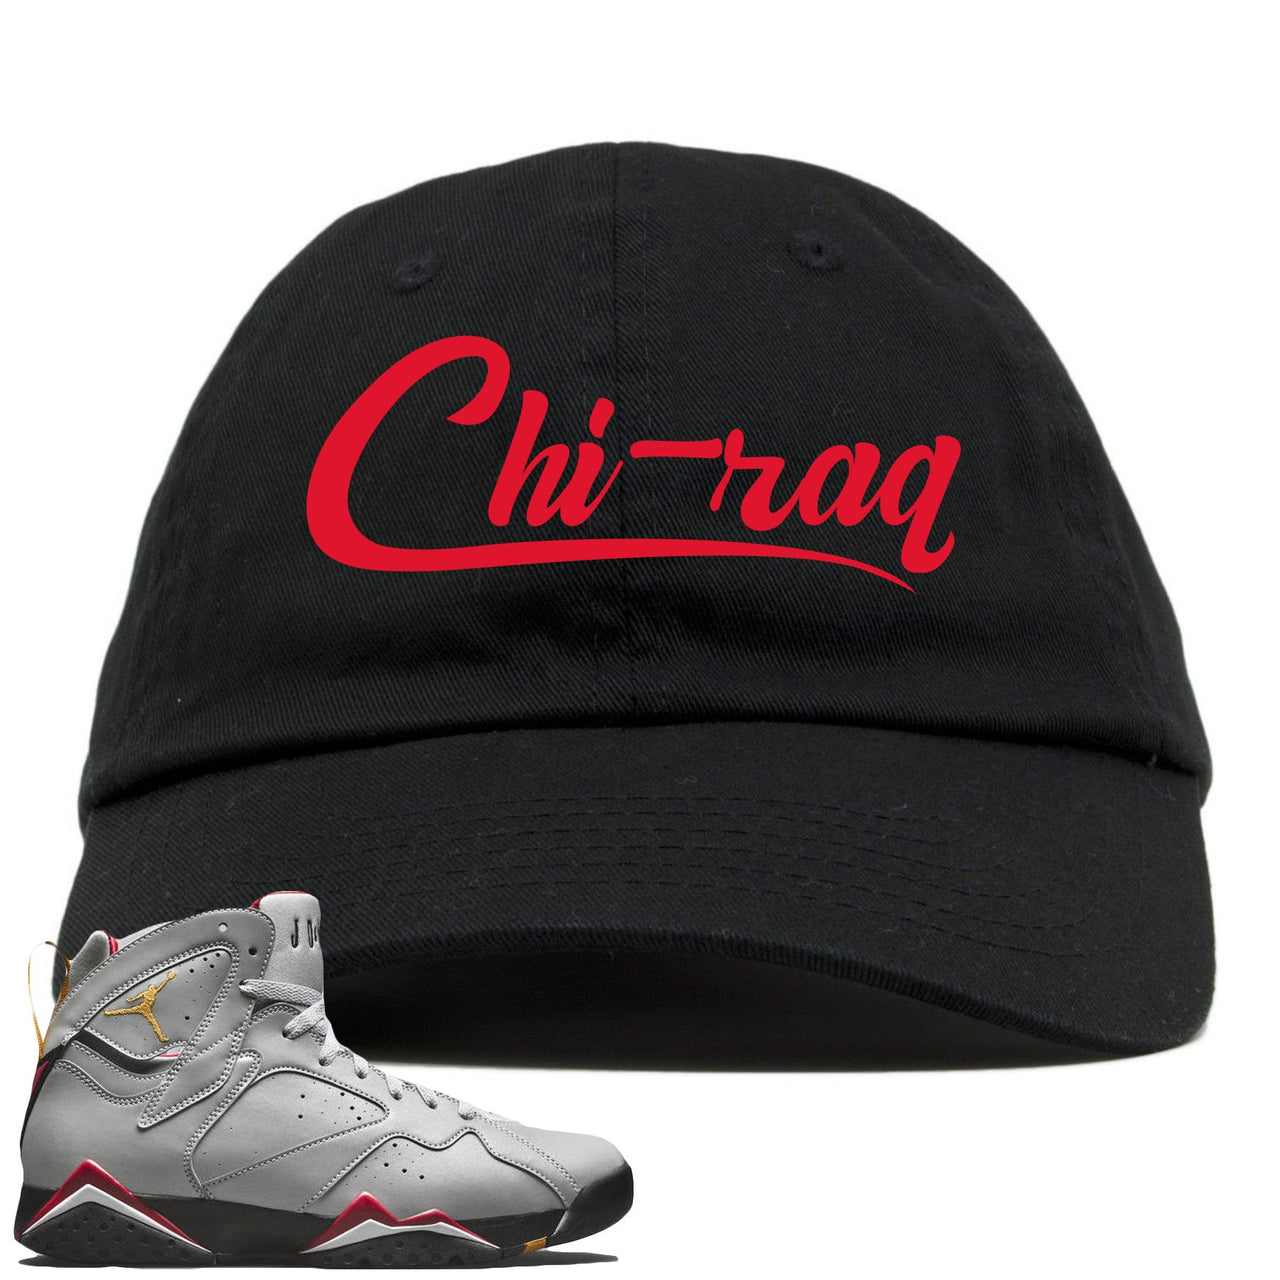 Reflections of a Champion 7s Dad Hat | Chiraq Script, Black